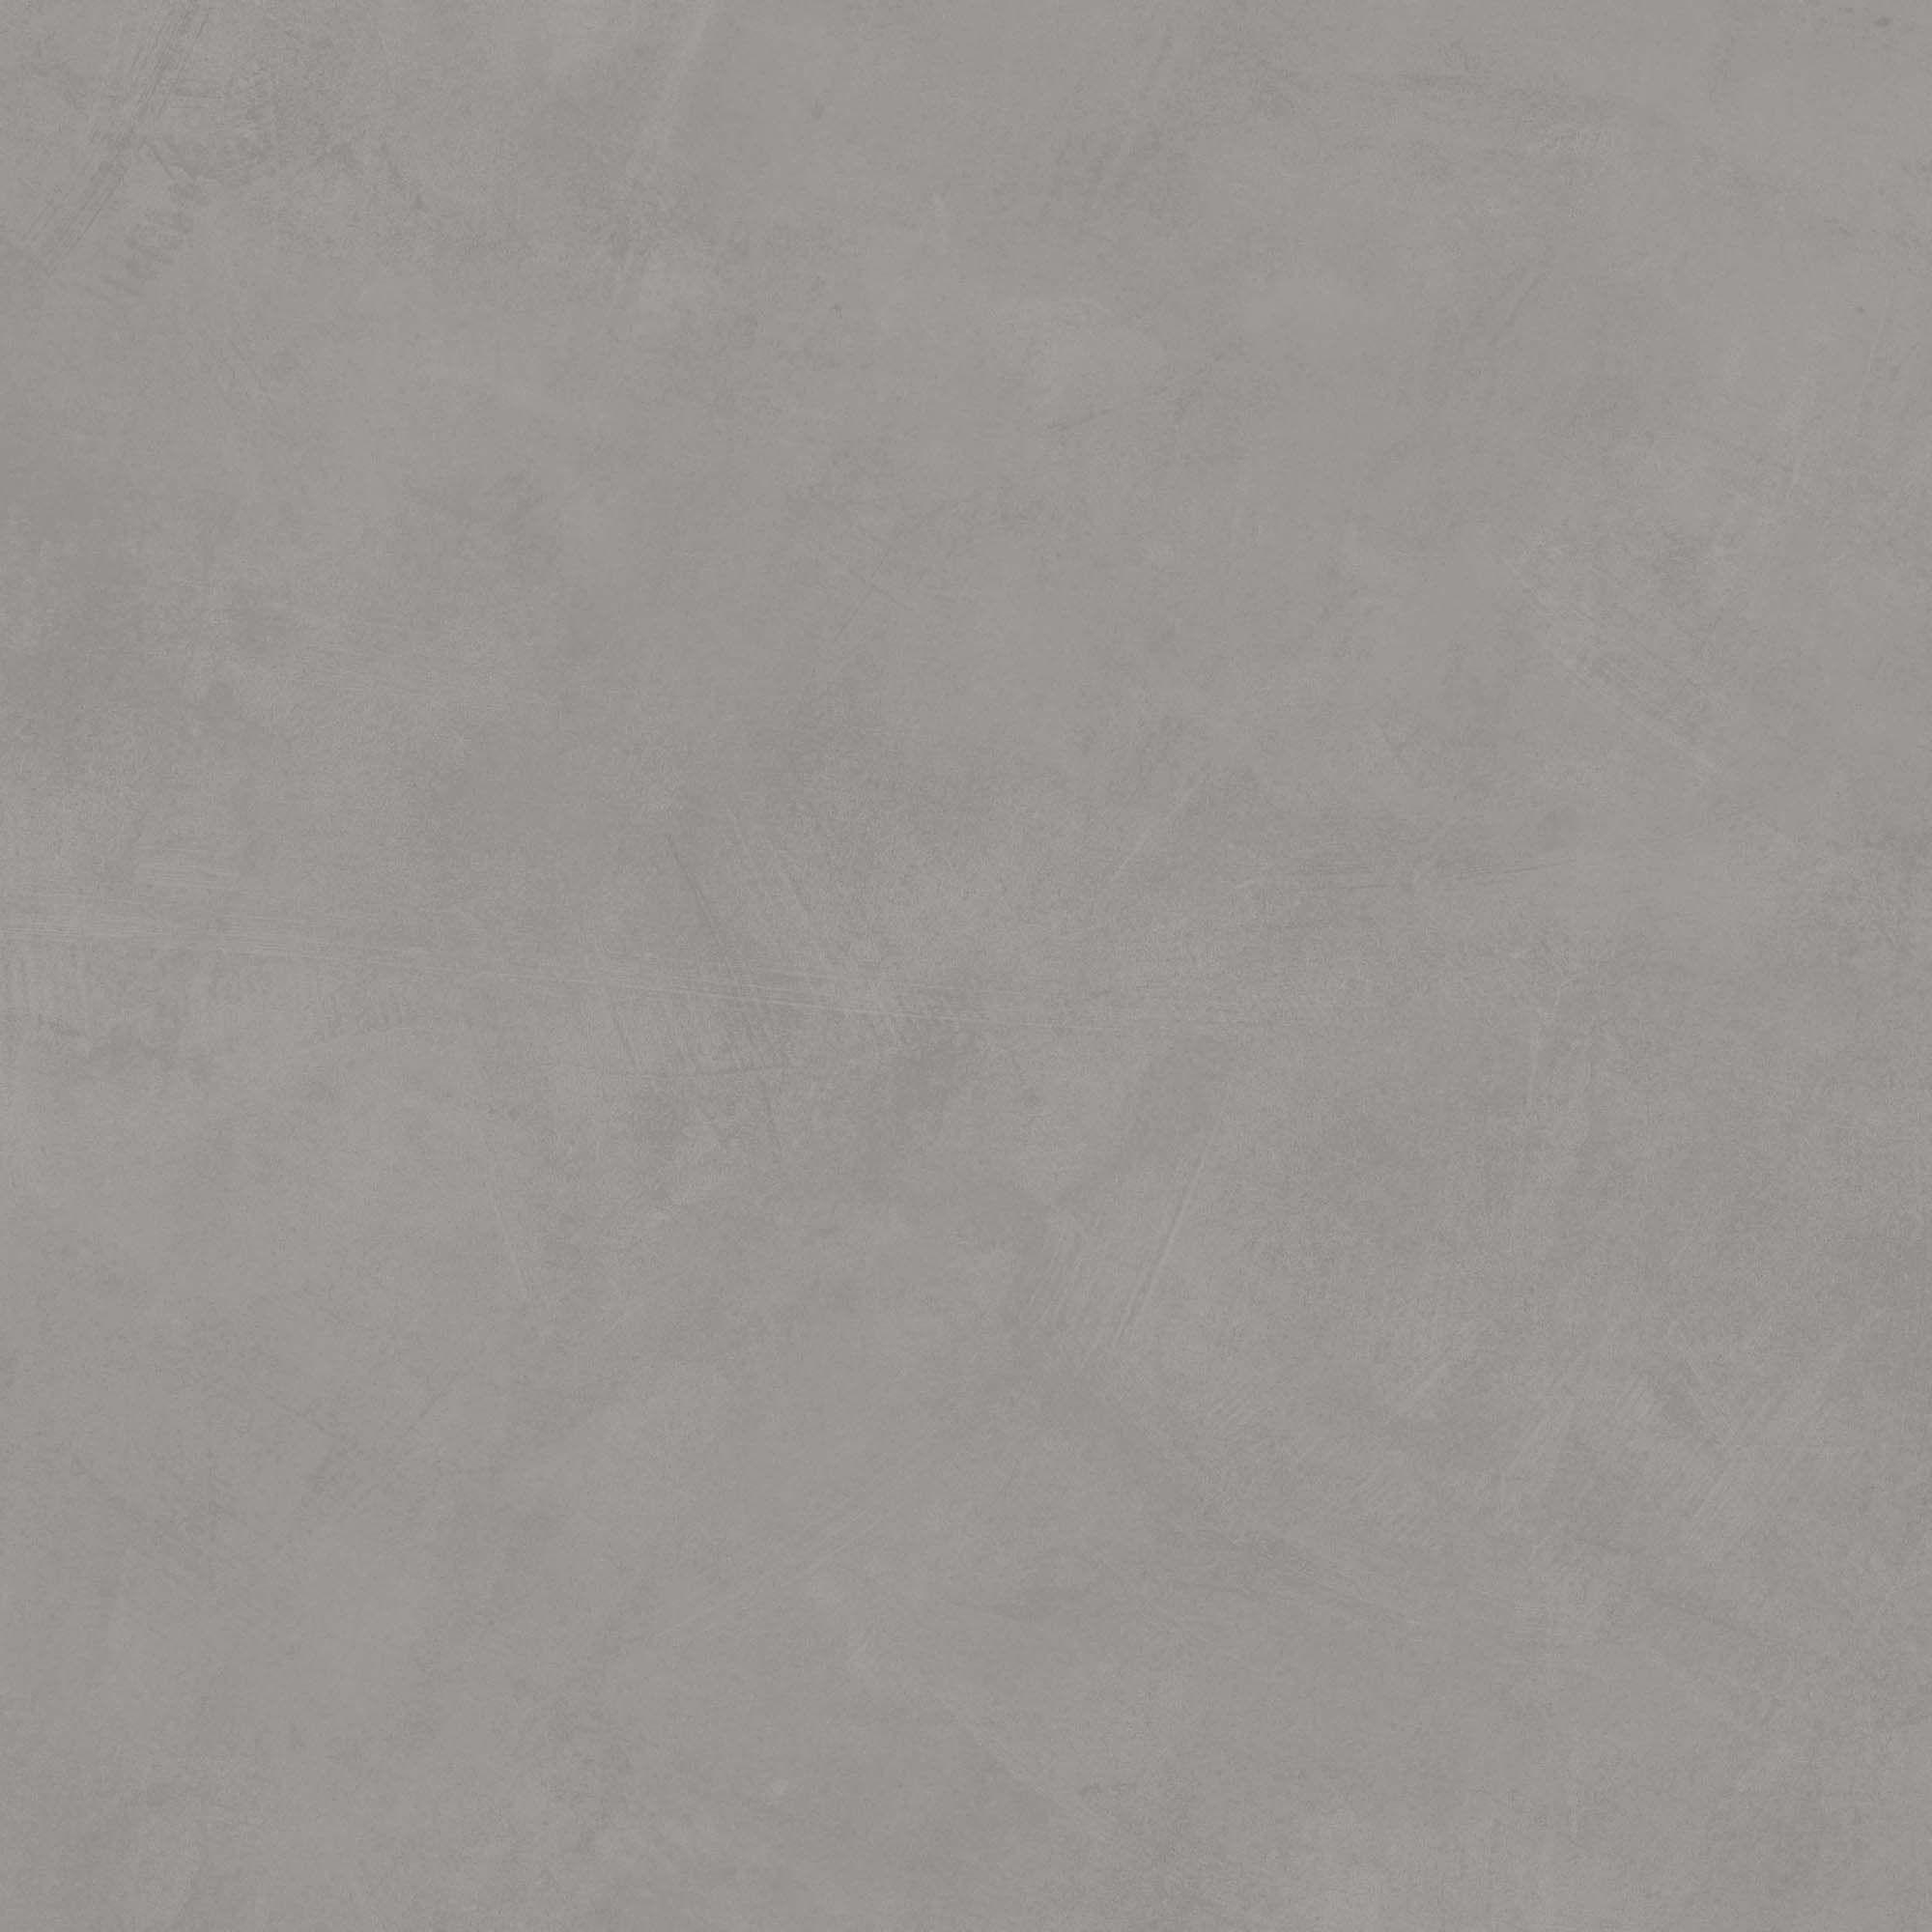 Vloertegels betonlook 90x90 cm - Insideart Ash